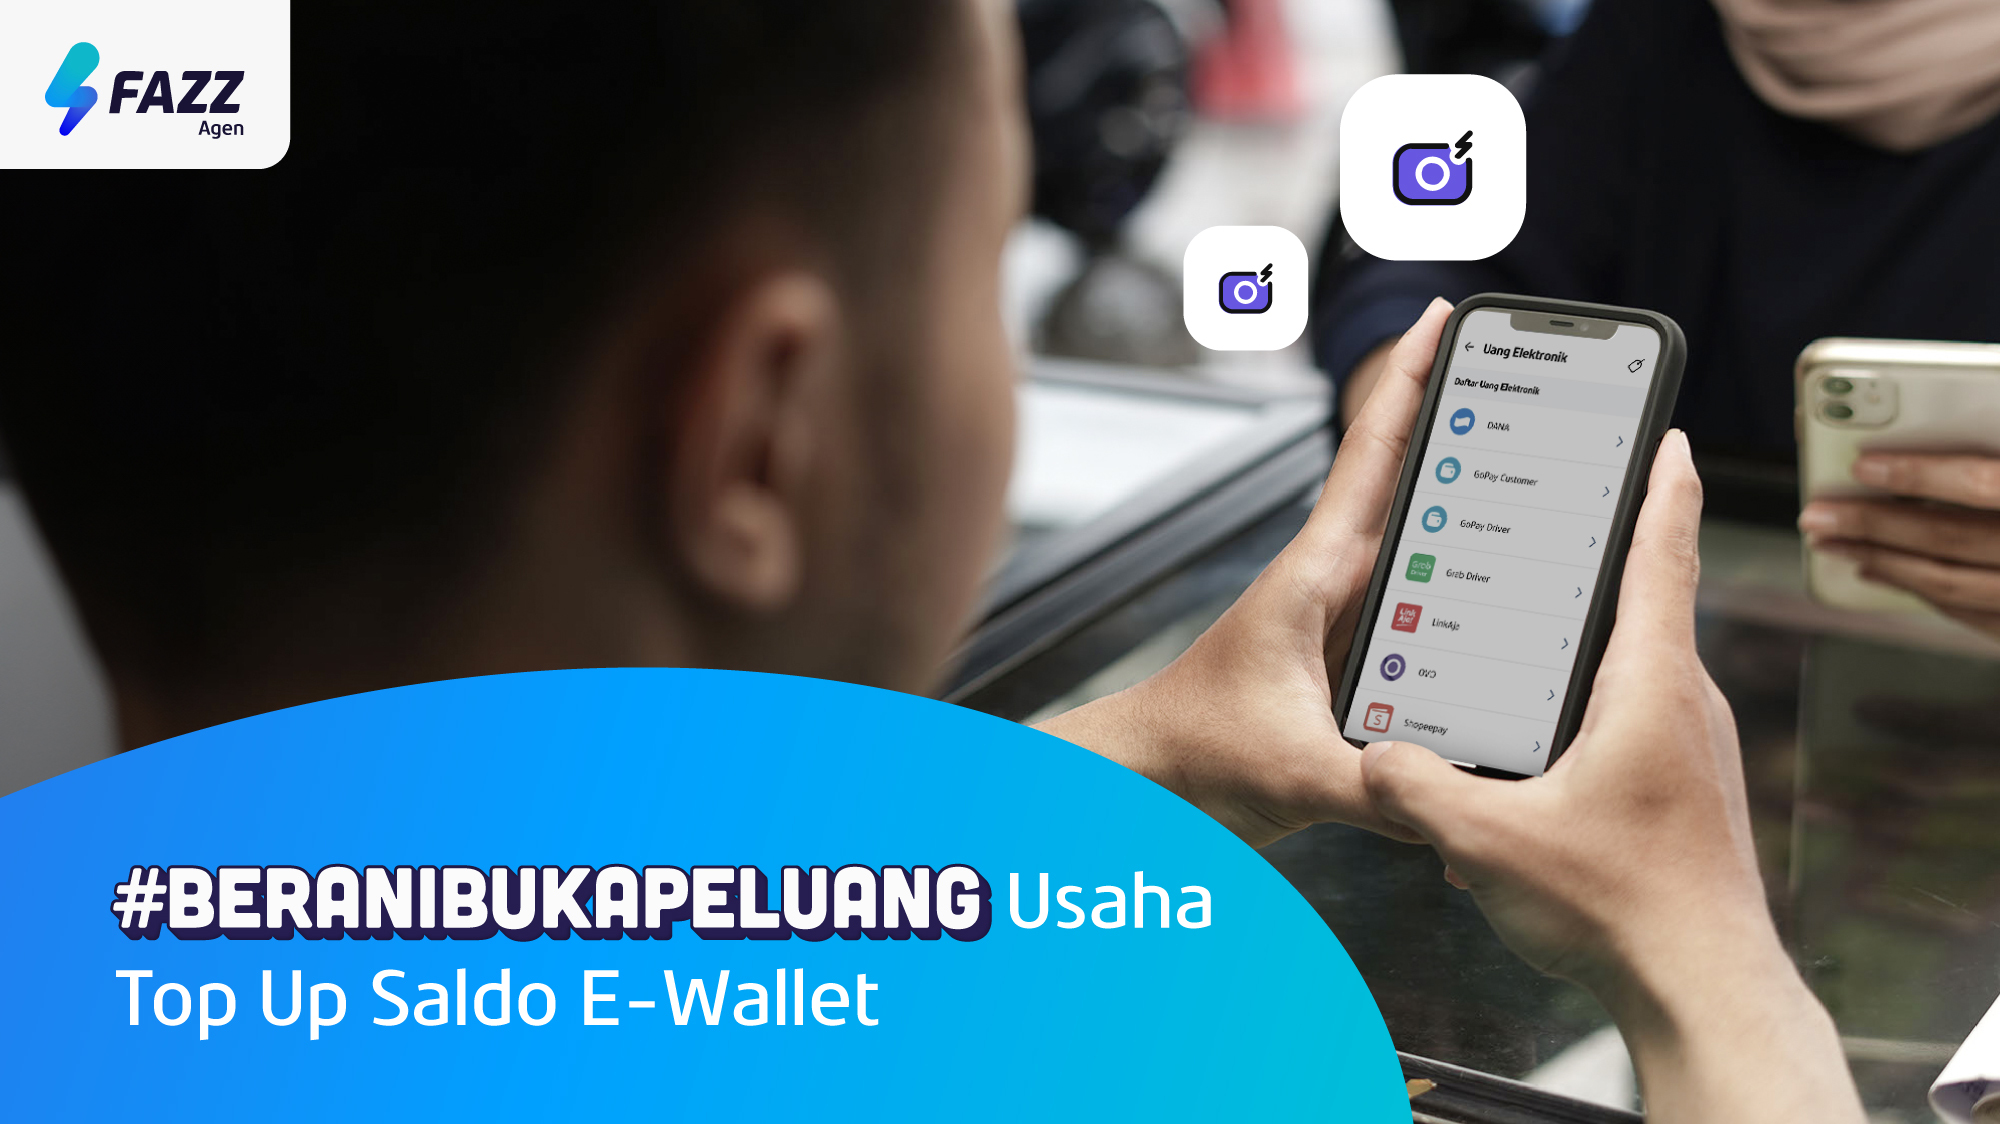 Top Up E-Wallet Lebih Lengkap & Murah Pakai Fazz Agen